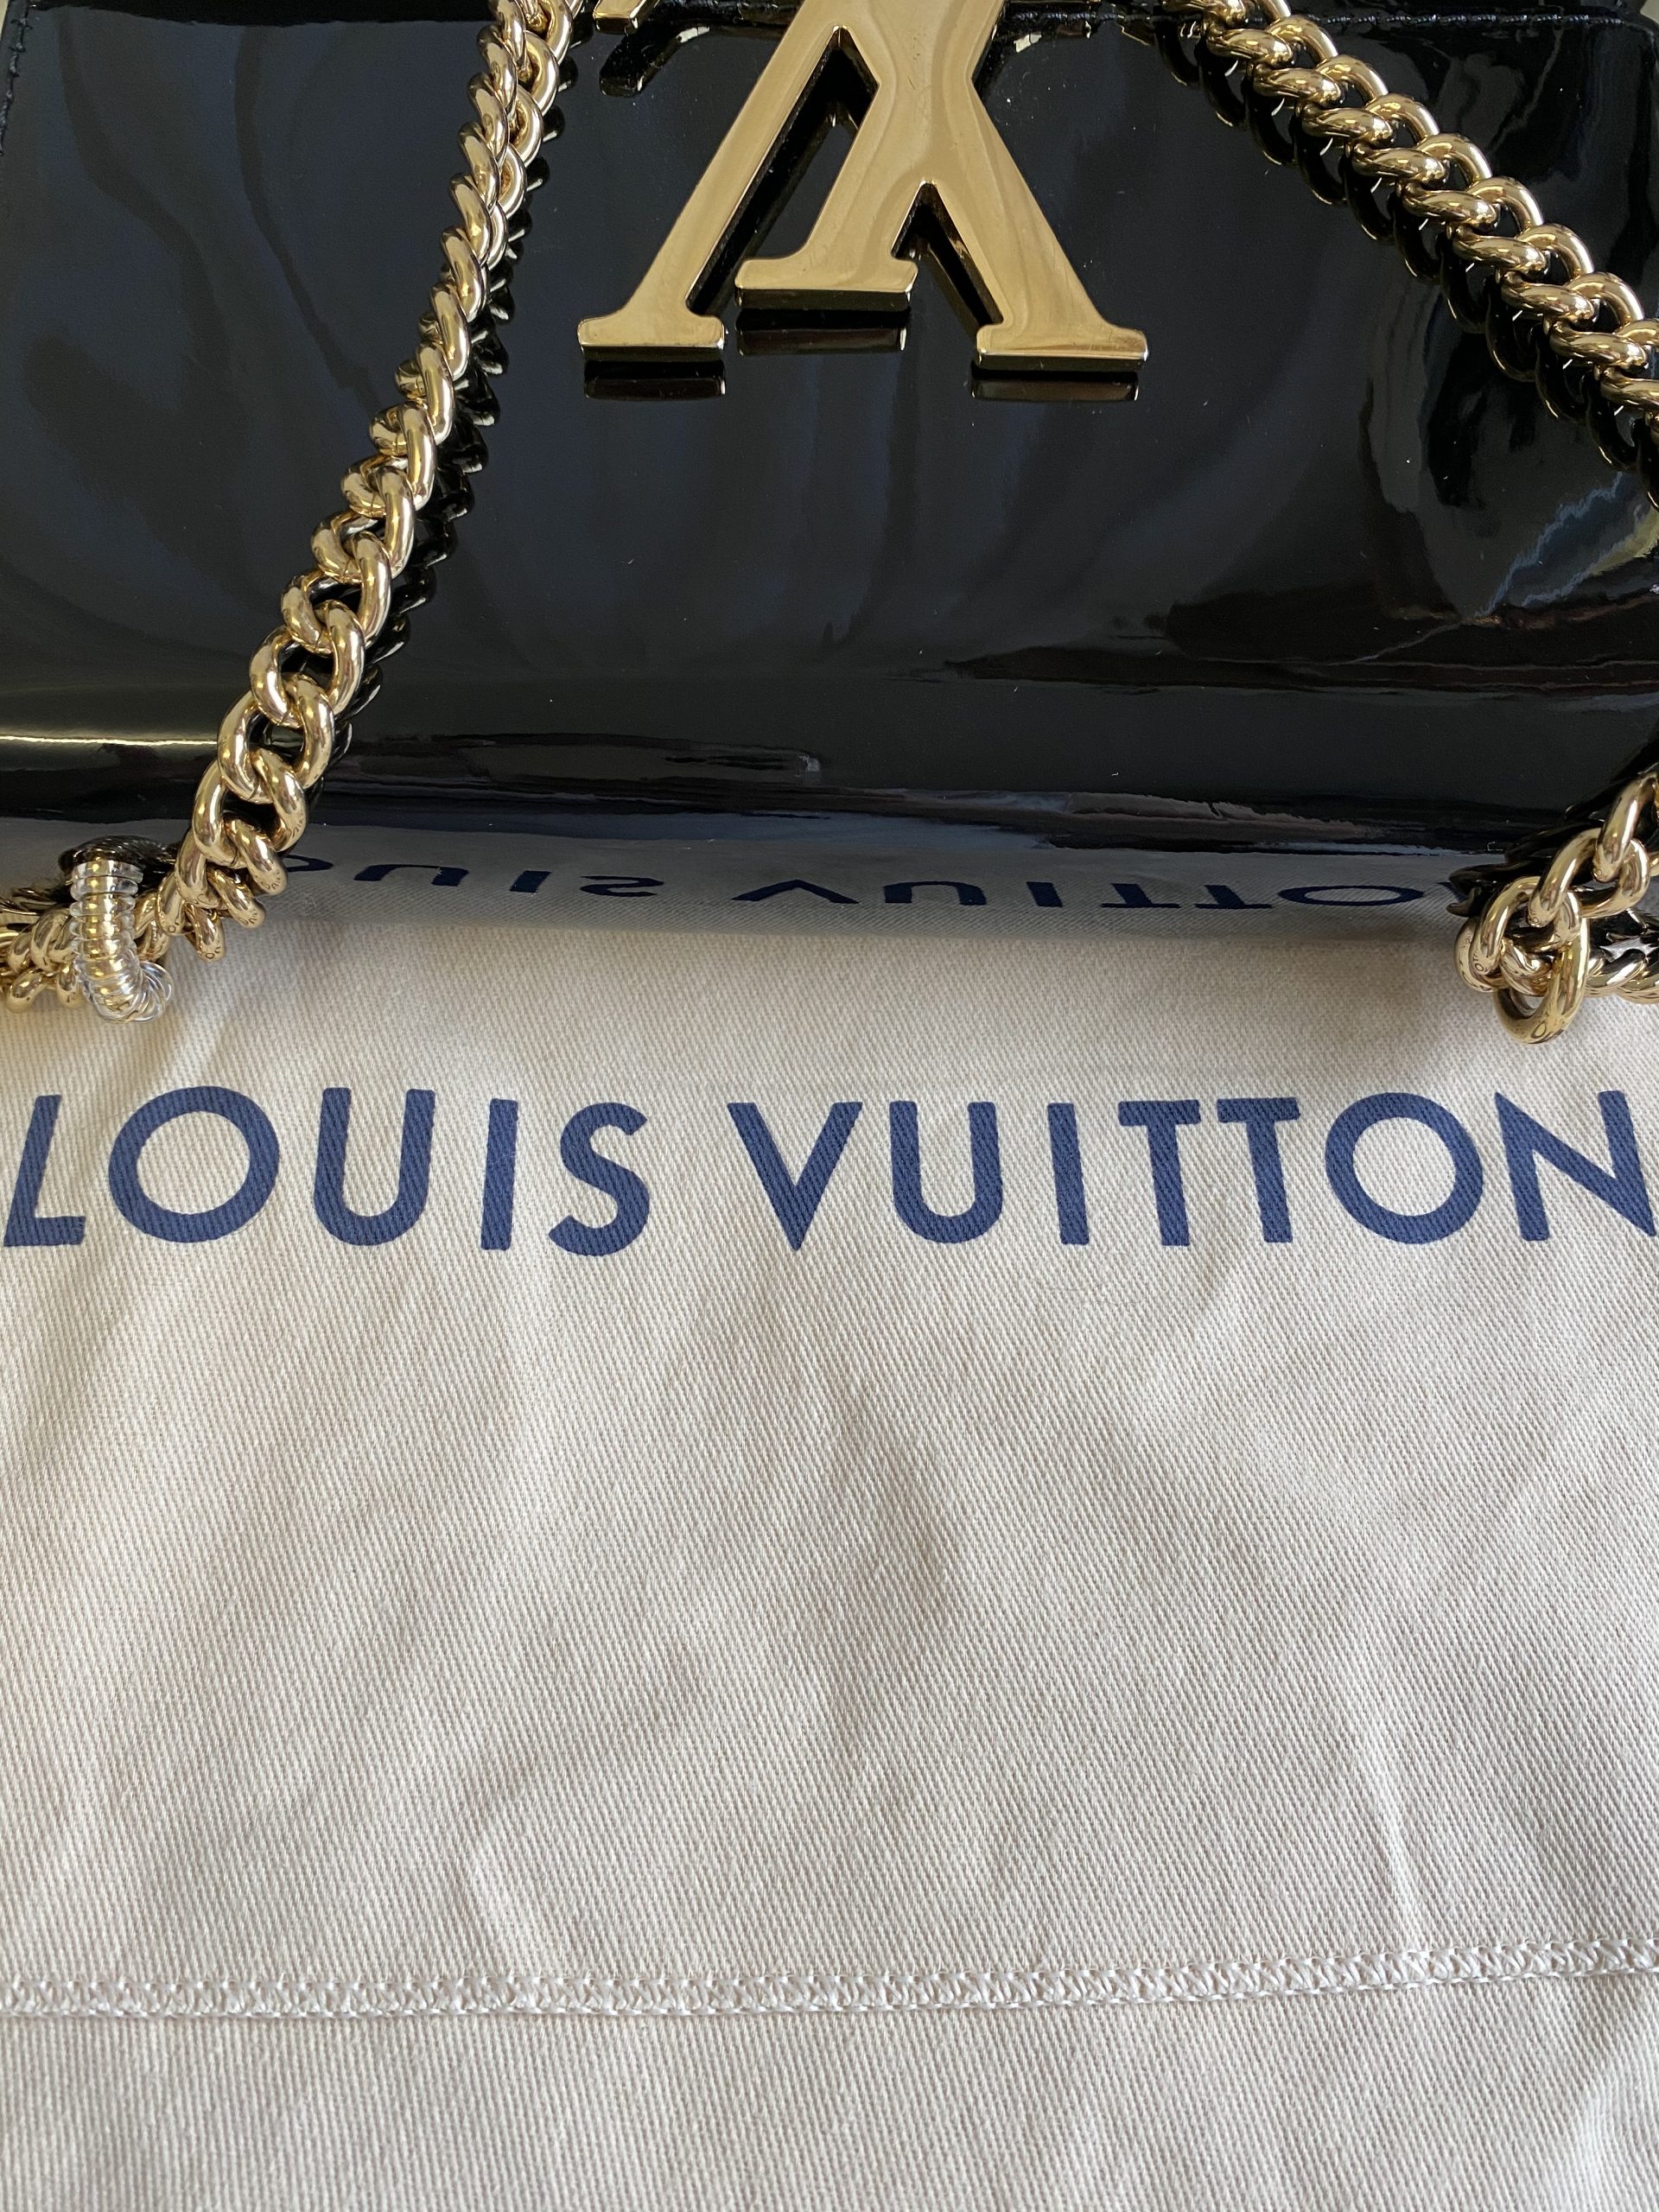 LOUIS VUITTON 'Louise' Patent Clutch - Black/Silver - Adorn Collection